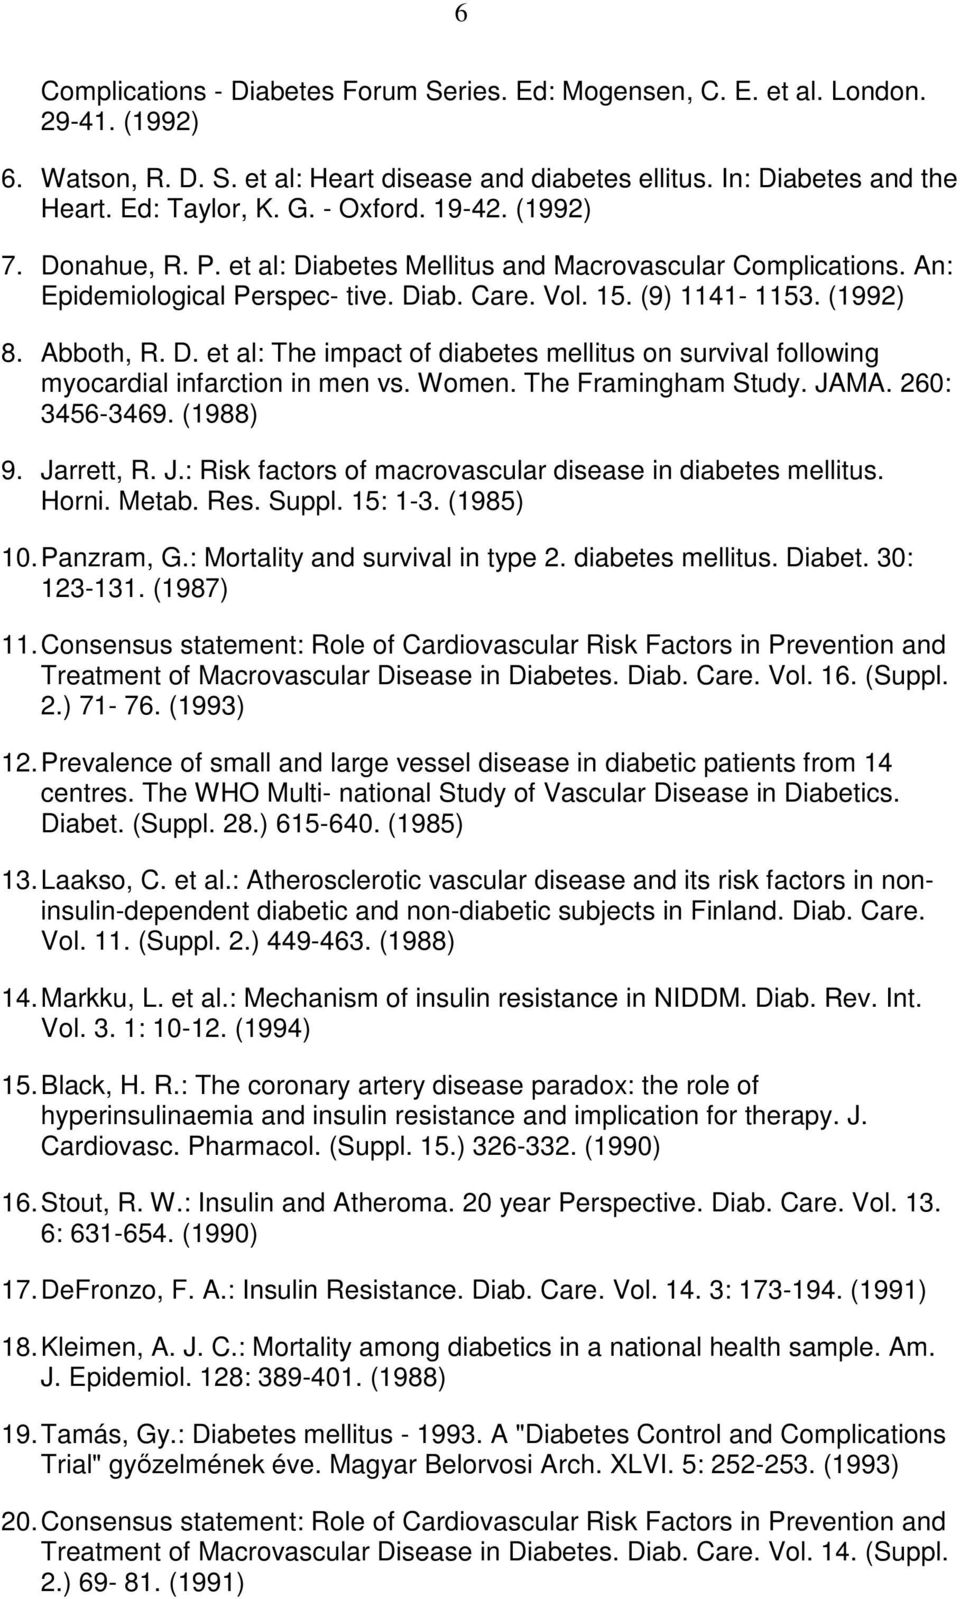 Women. The Framingham Study. JAMA. 260: 3456-3469. (1988) 9. Jarrett, R. J.: Risk factors of macrovascular disease in diabetes mellitus. Horni. Metab. Res. Suppl. 15: 1-3. (1985) 10. Panzram, G.